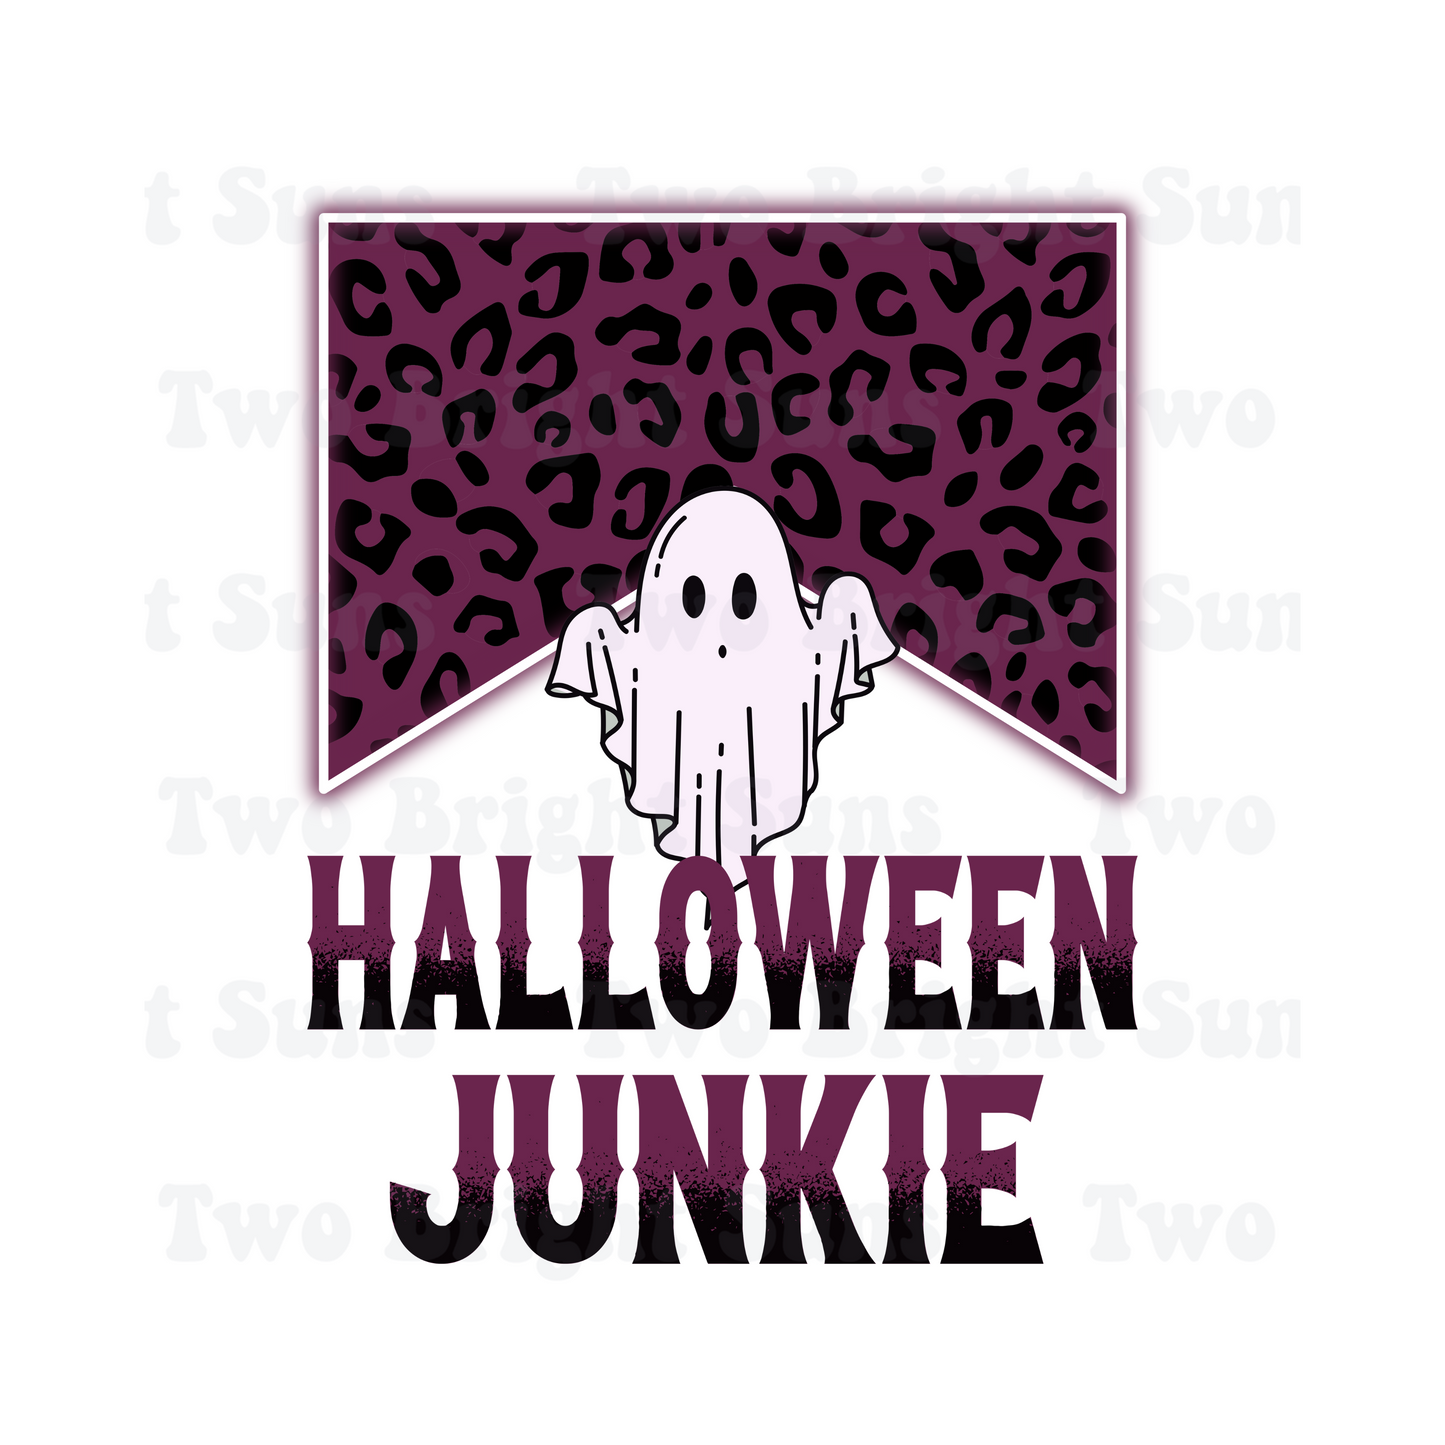 Halloween Junkie